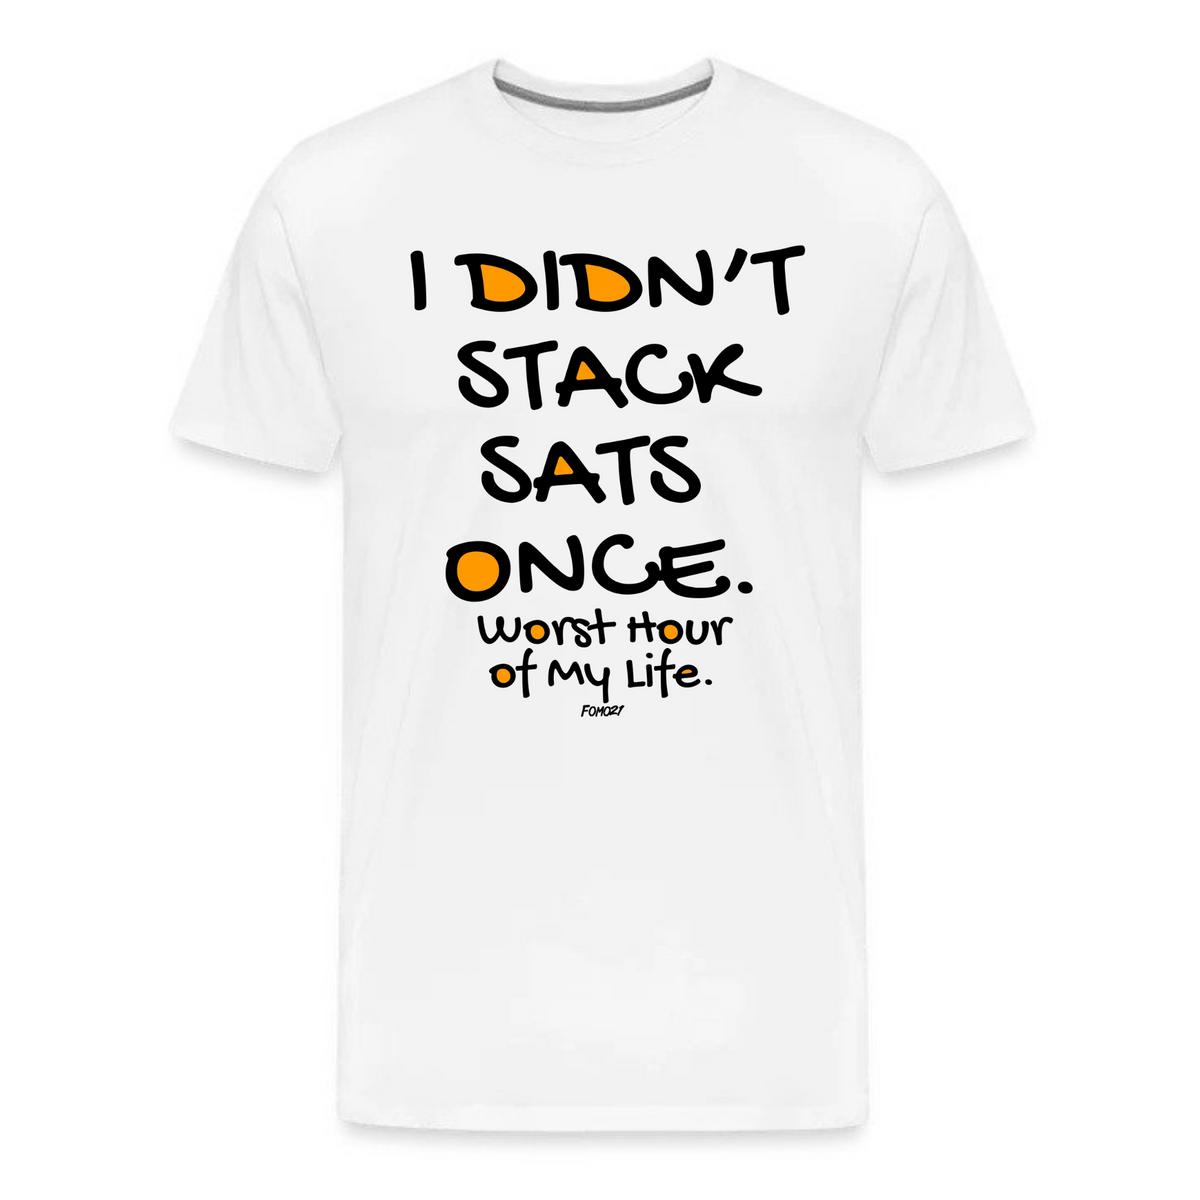 I Didn't Stack Sats Once Bitcoin T-Shirt - fomo21